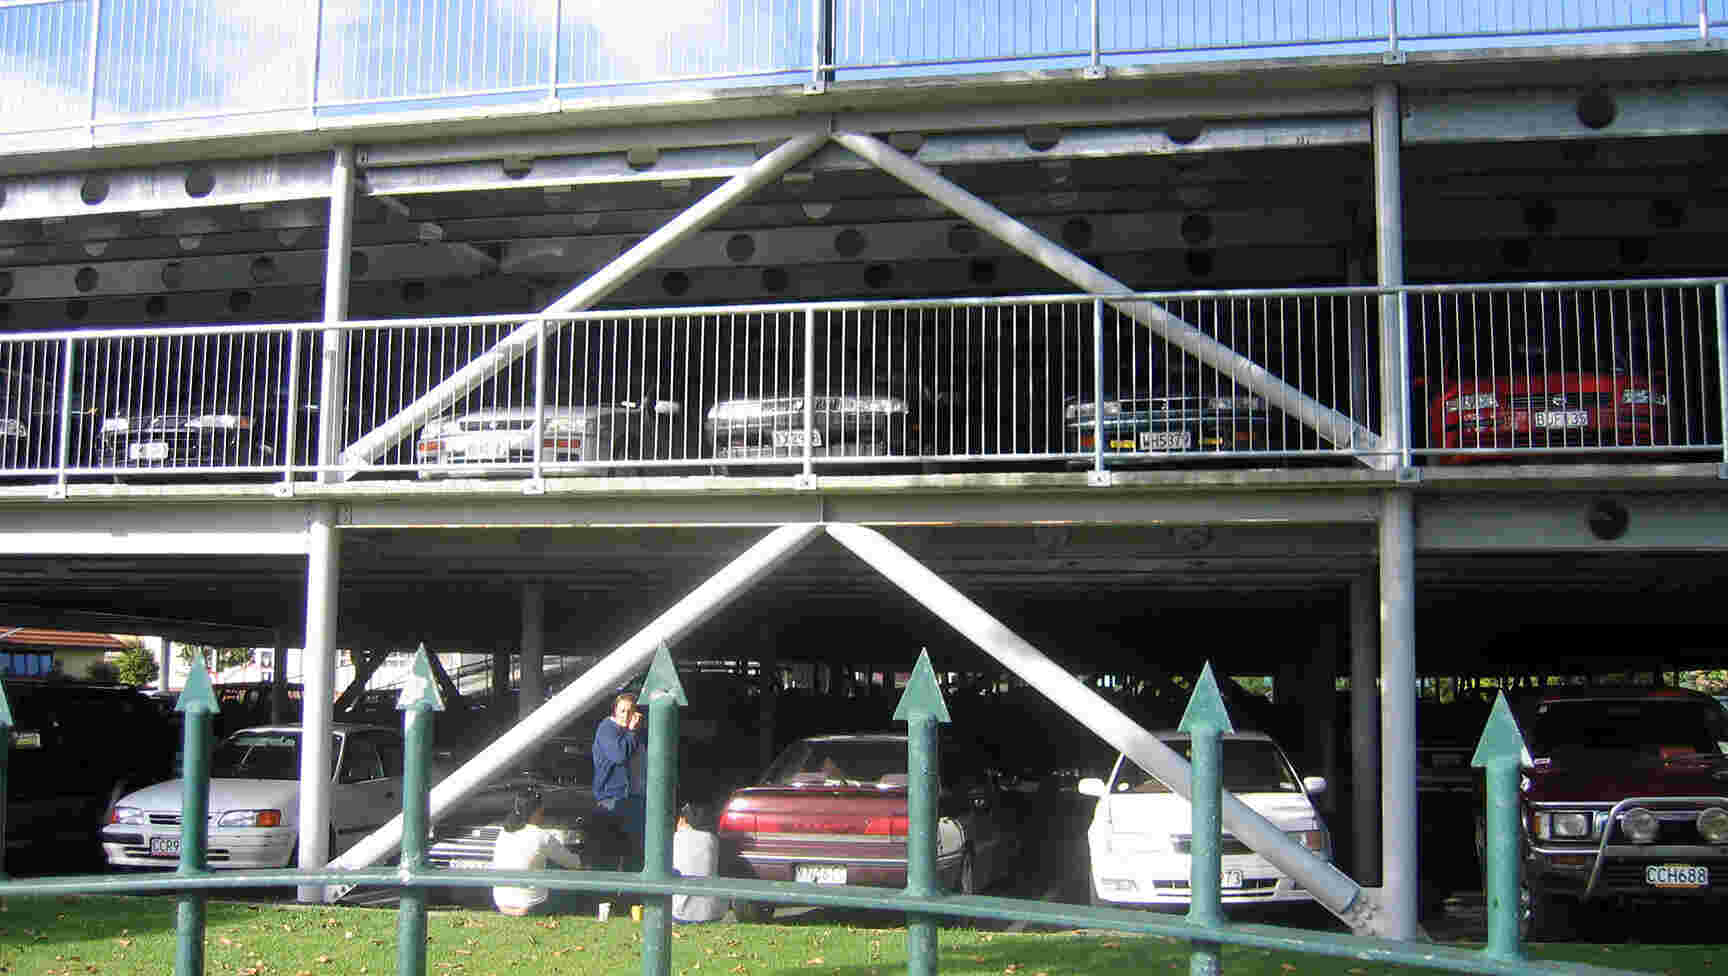 Manukau Institute of Technology Carpark, Auckland